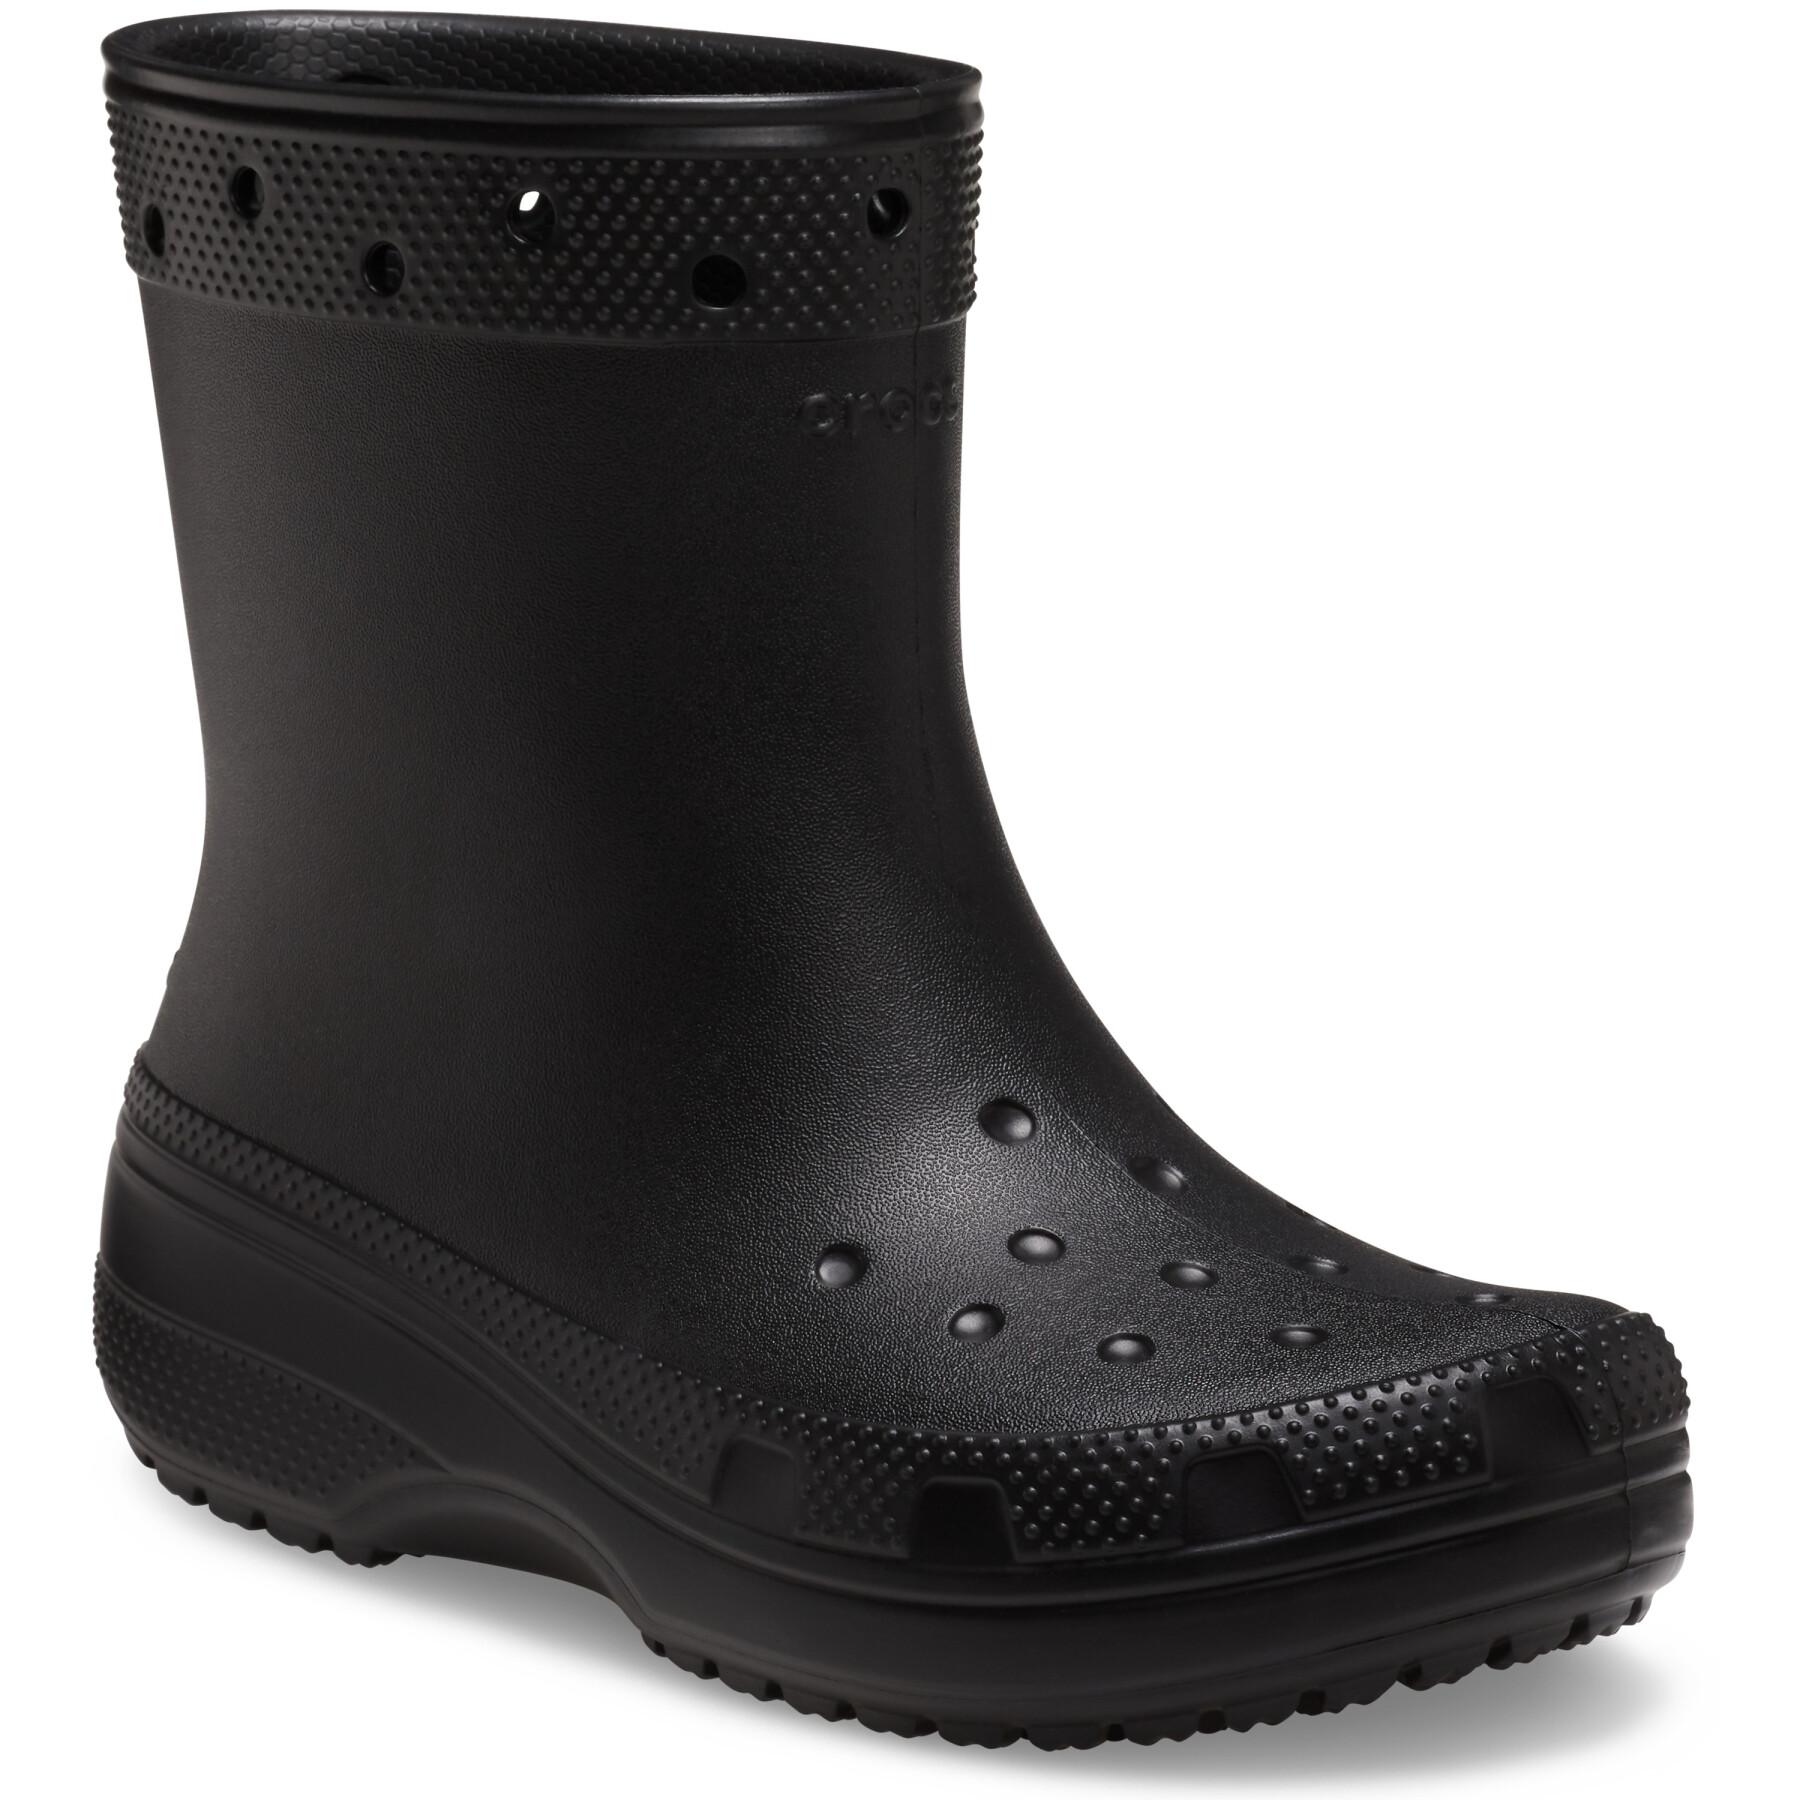 Children's boots Crocs Classic